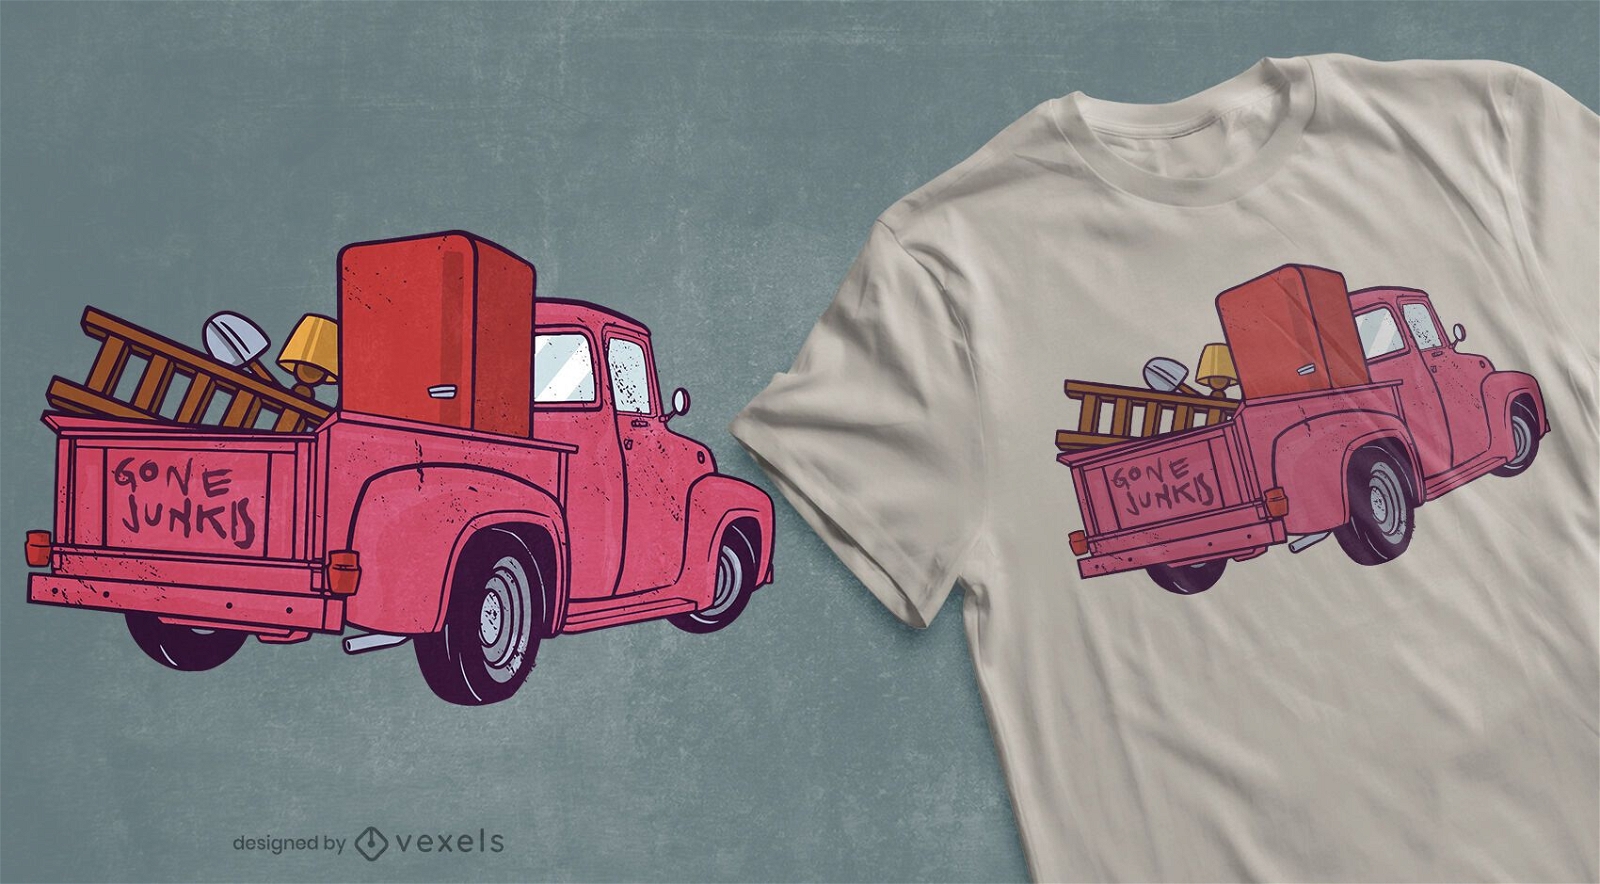 Pickup truck antiquing t-shirt design